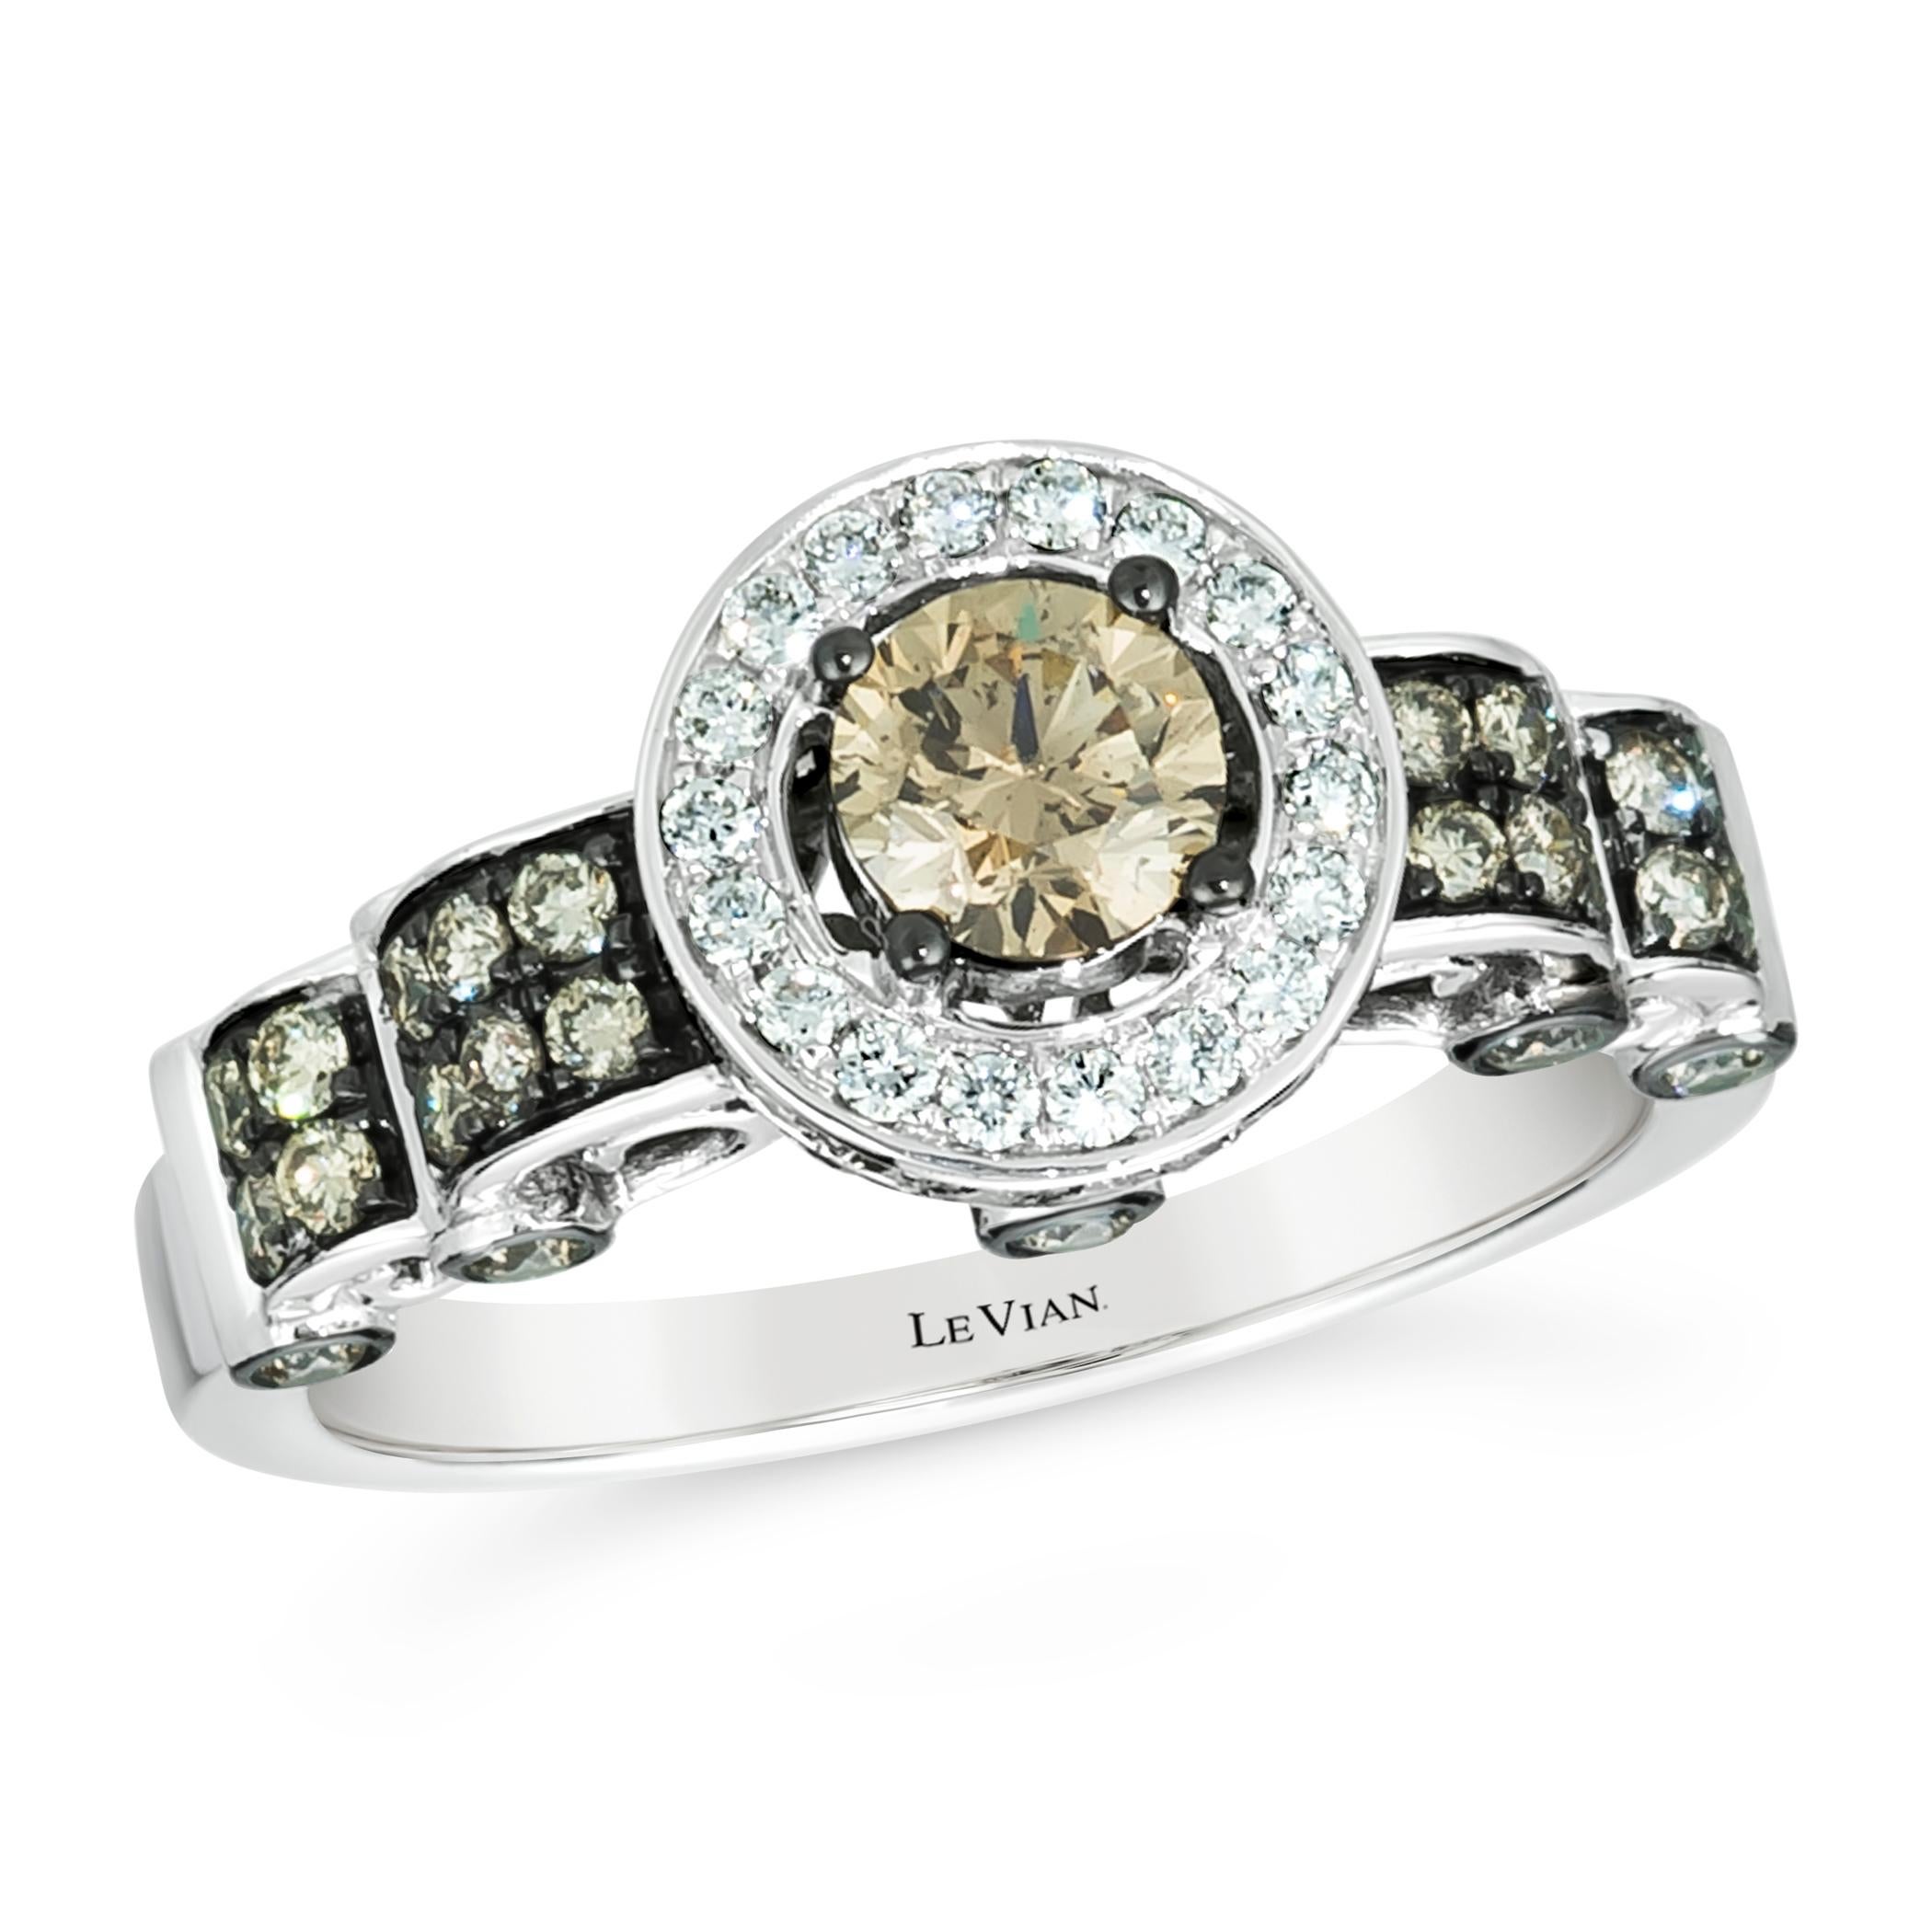 LeVian 14K White Gold White/Chocolate Diamond Halo Fashion Ring - Size 6